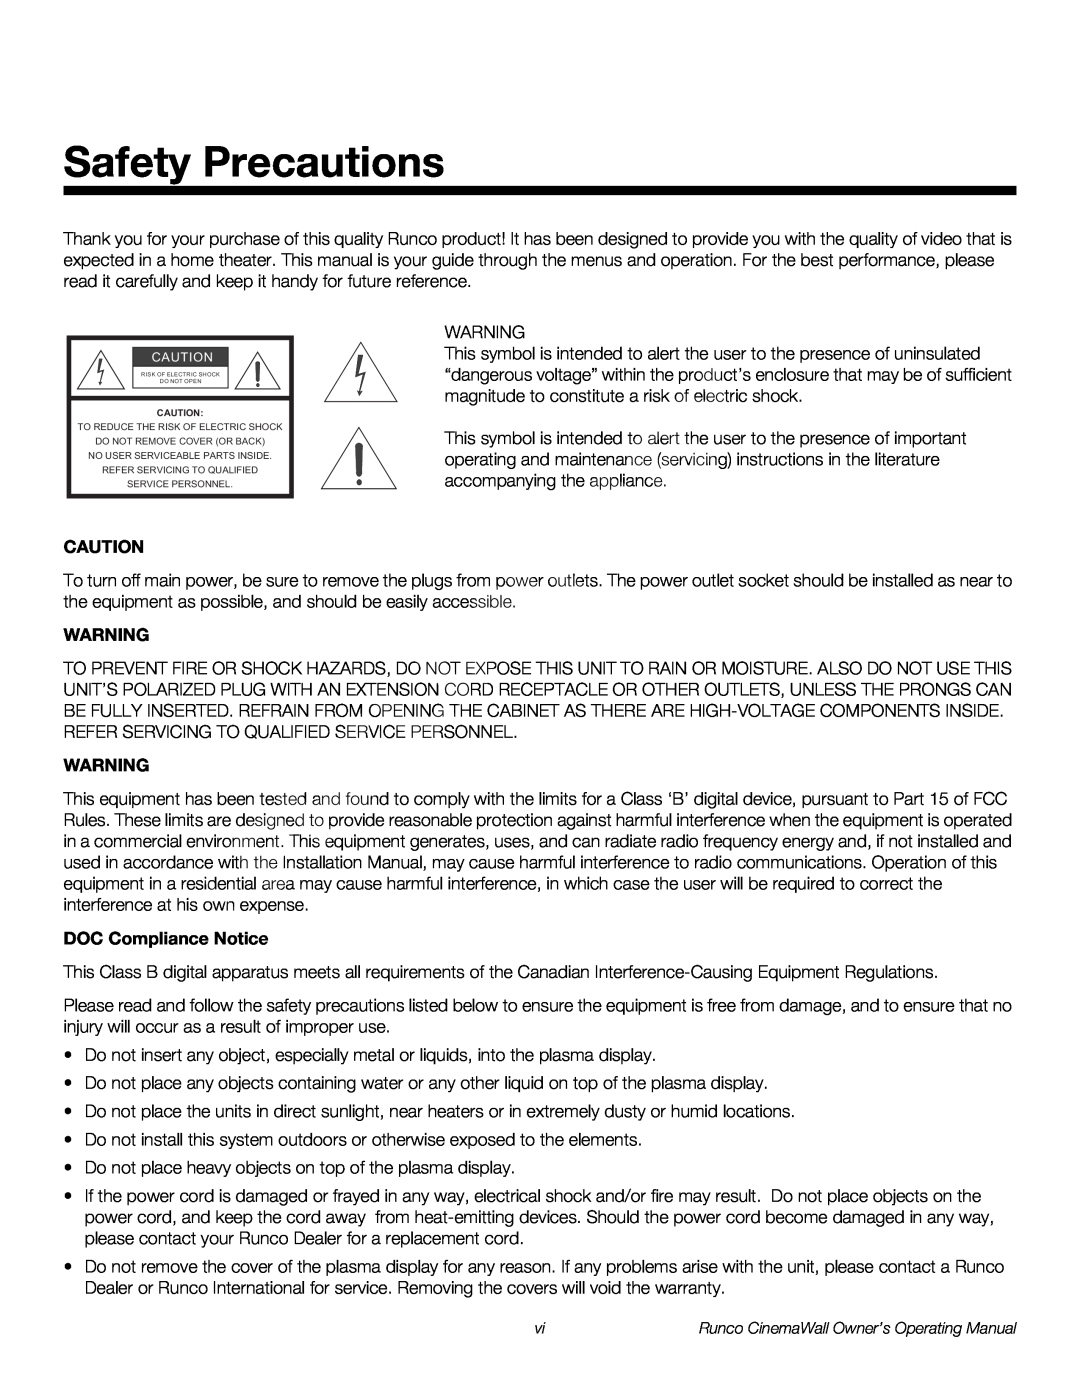 Runco CW-50XA, CW-61, CW-42HD manual Safety Precautions, DOC Compliance Notice 